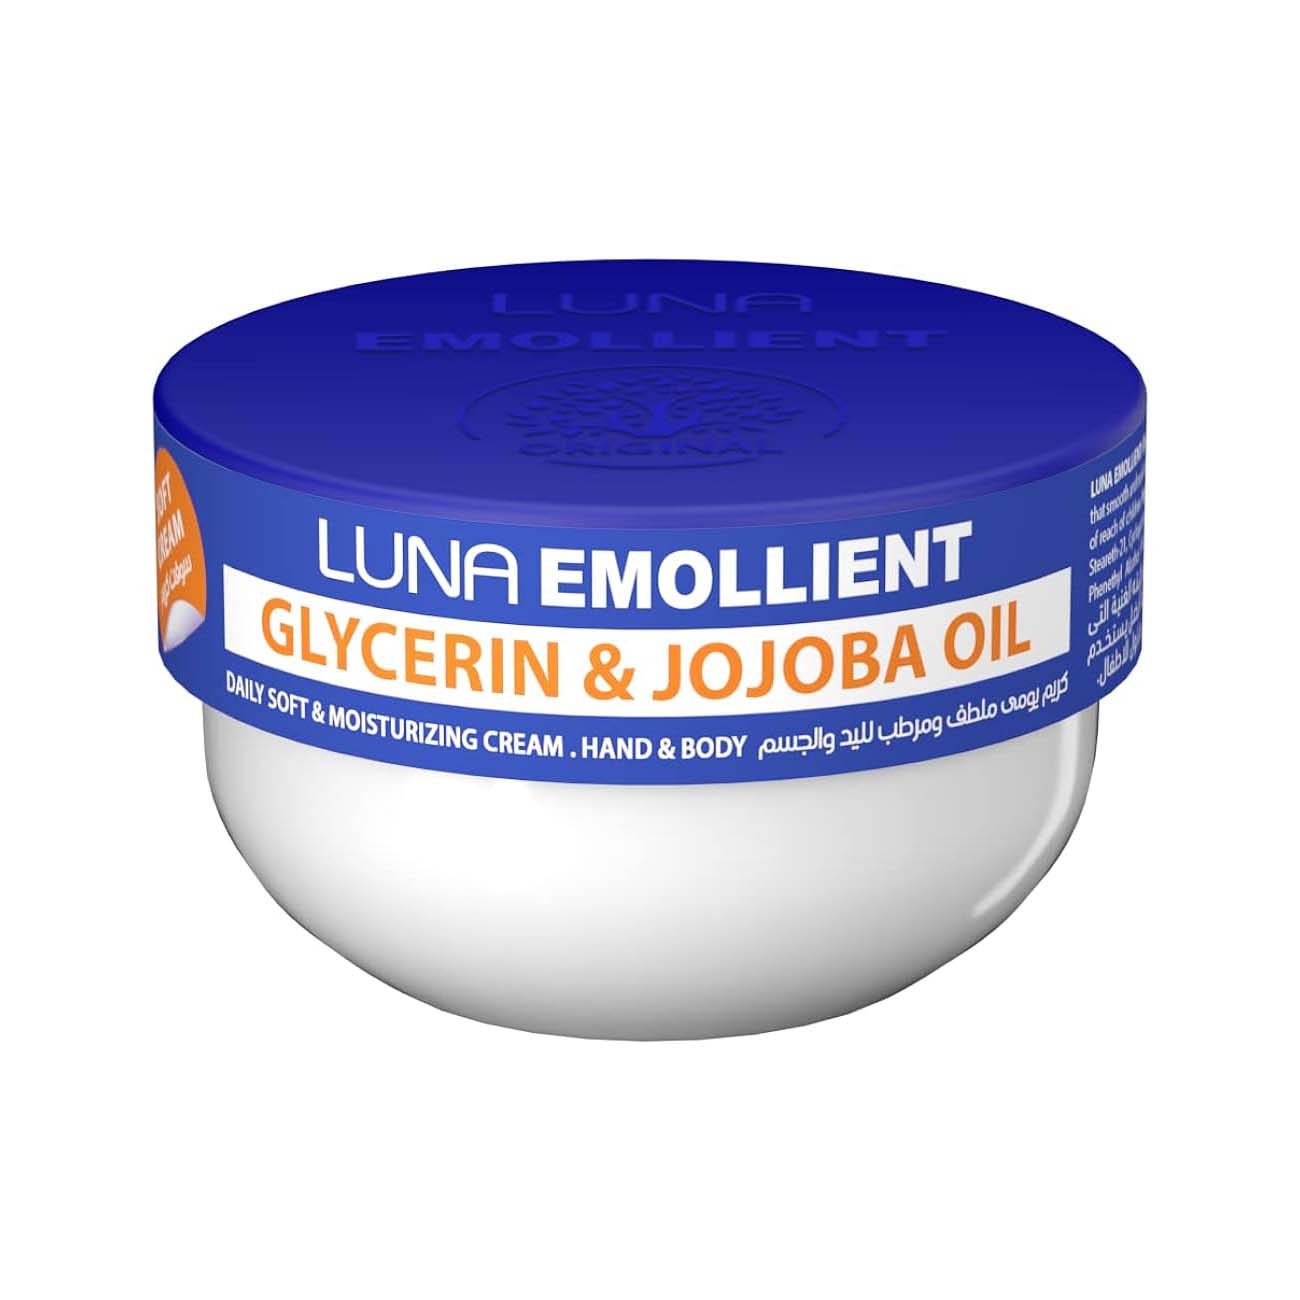 Luna Emollient Glycerin & Jojoba Oil Moisturizing Cream